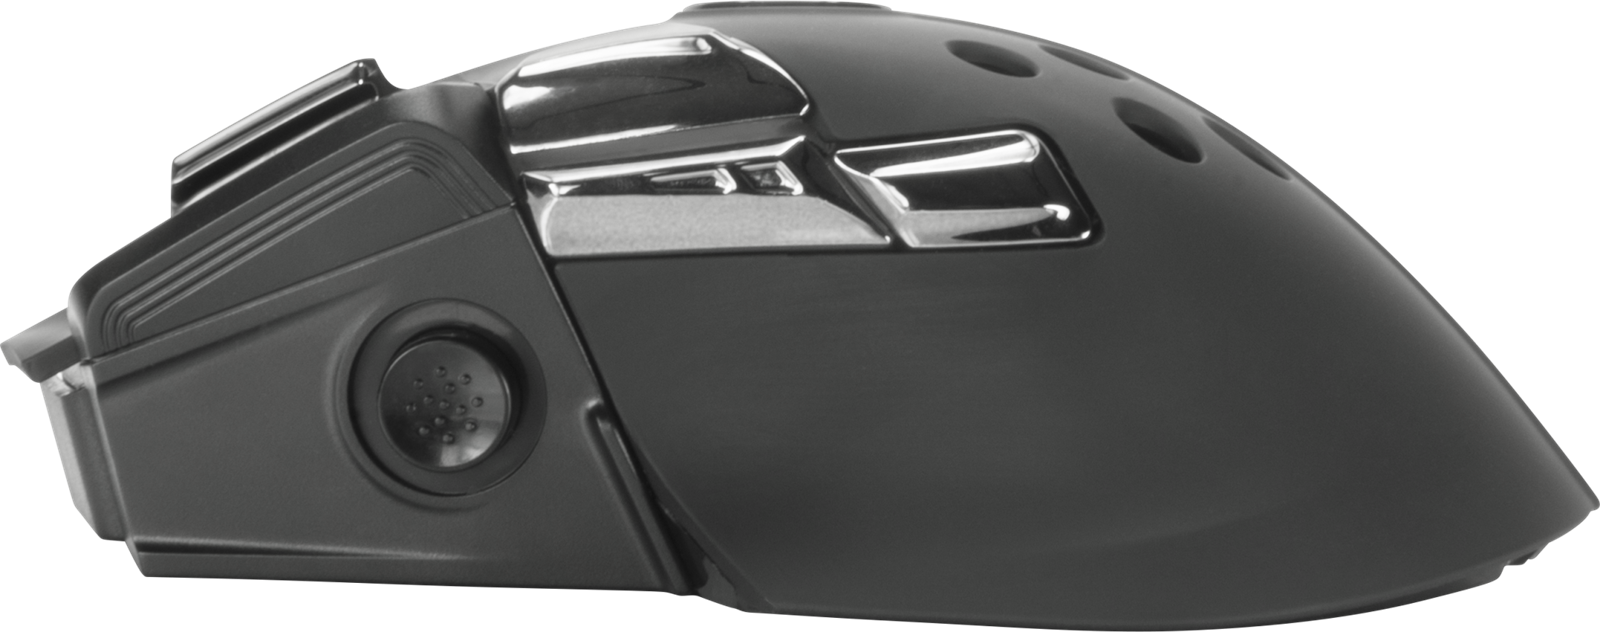 SpeedLink IMPERIOR Gaming Mouser Wireless, rubber black